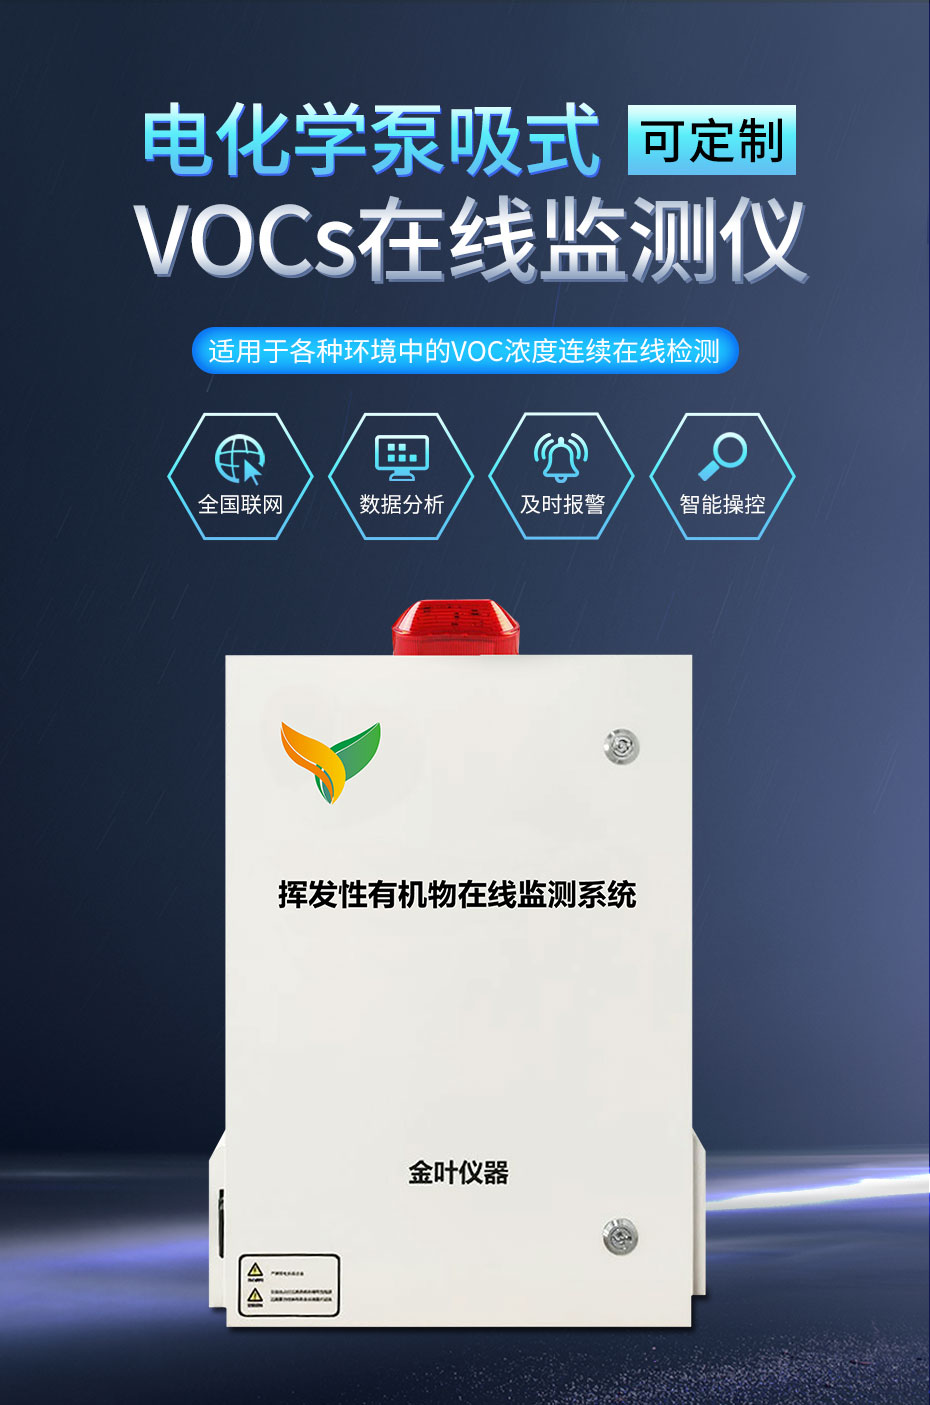 VOCS在线监测系统功能